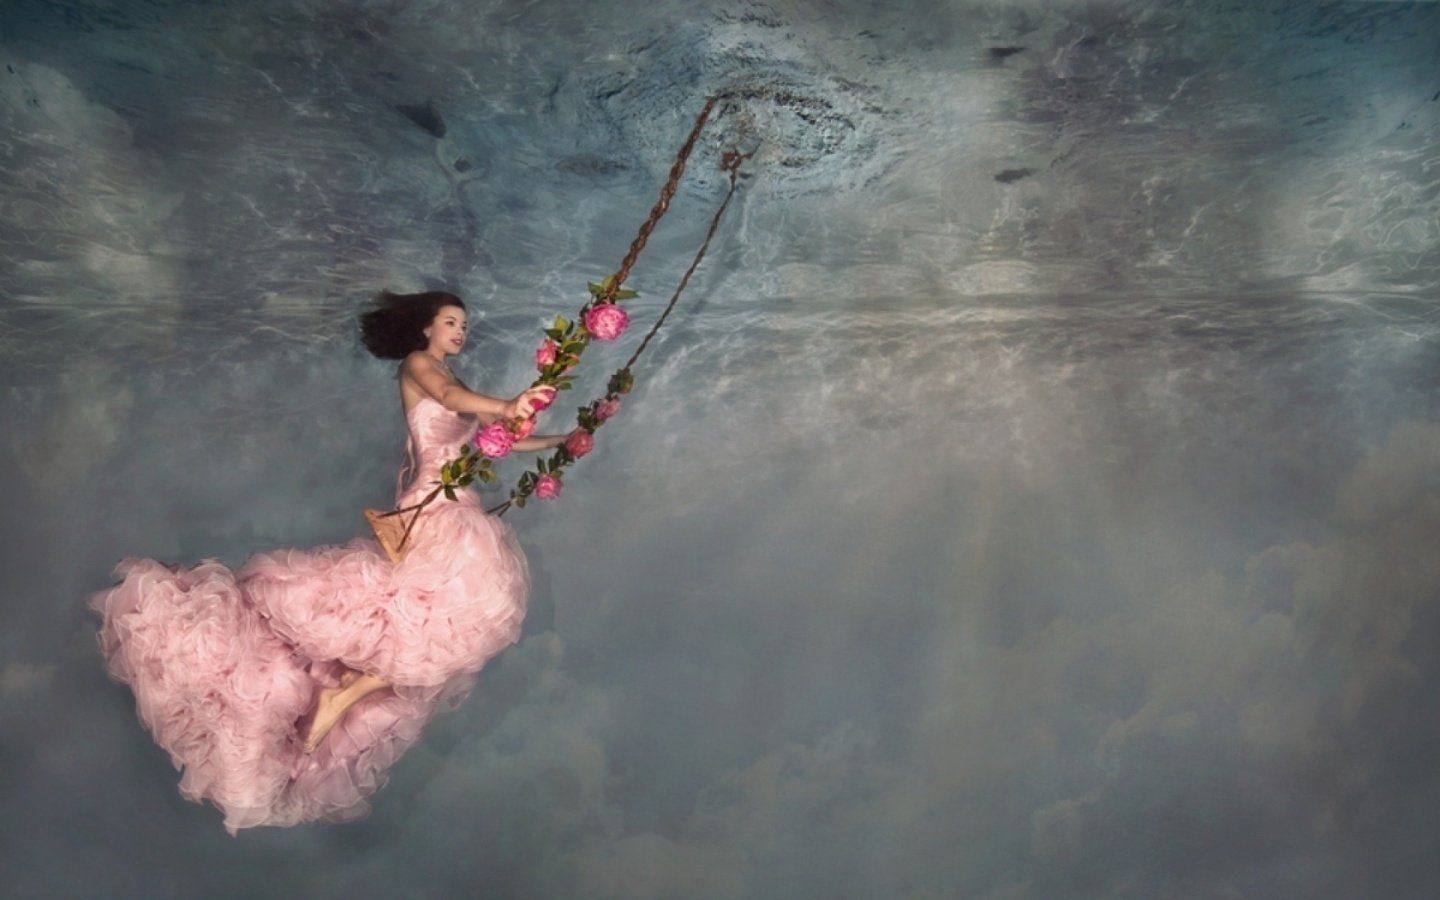 Underwater Swing Wallpaper and Background Imagex900